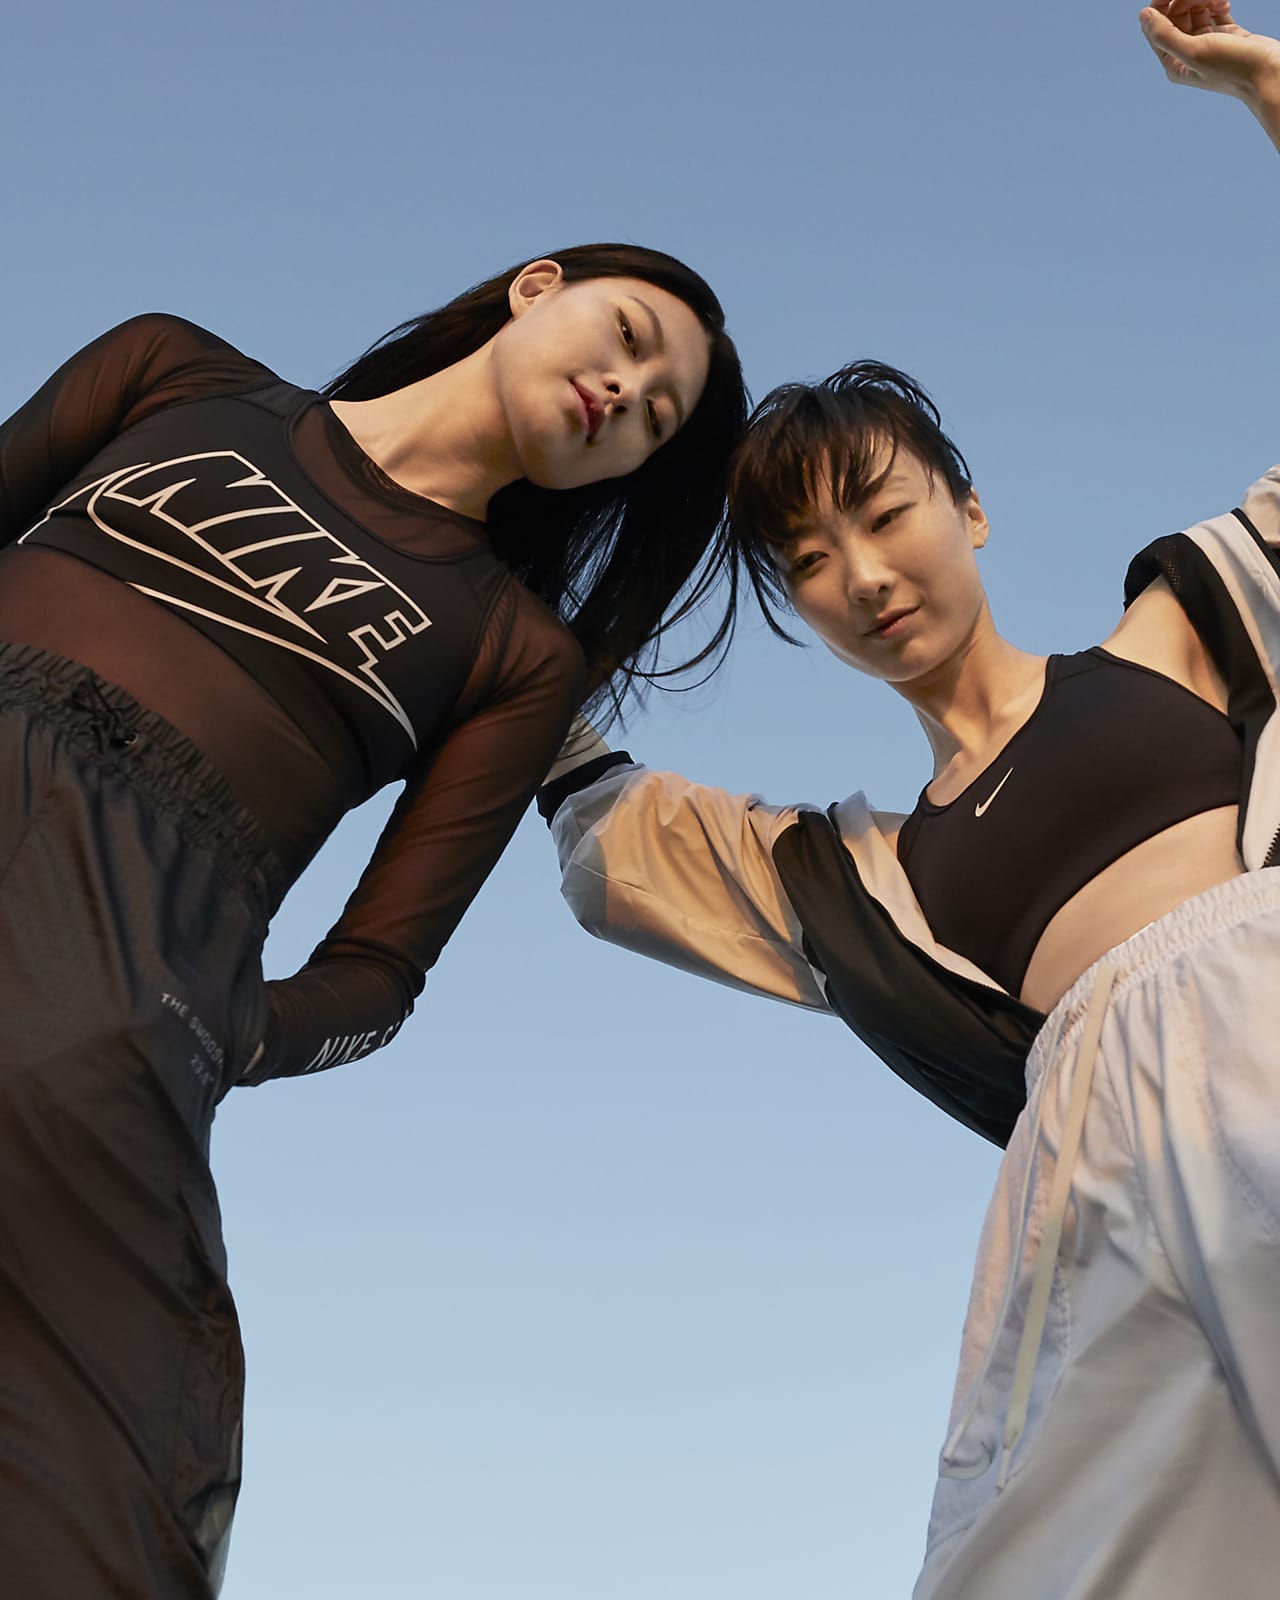 Nike Women's Black Shine Dri-Fit Swoosh 1-Piece Pad MS Sports Bra